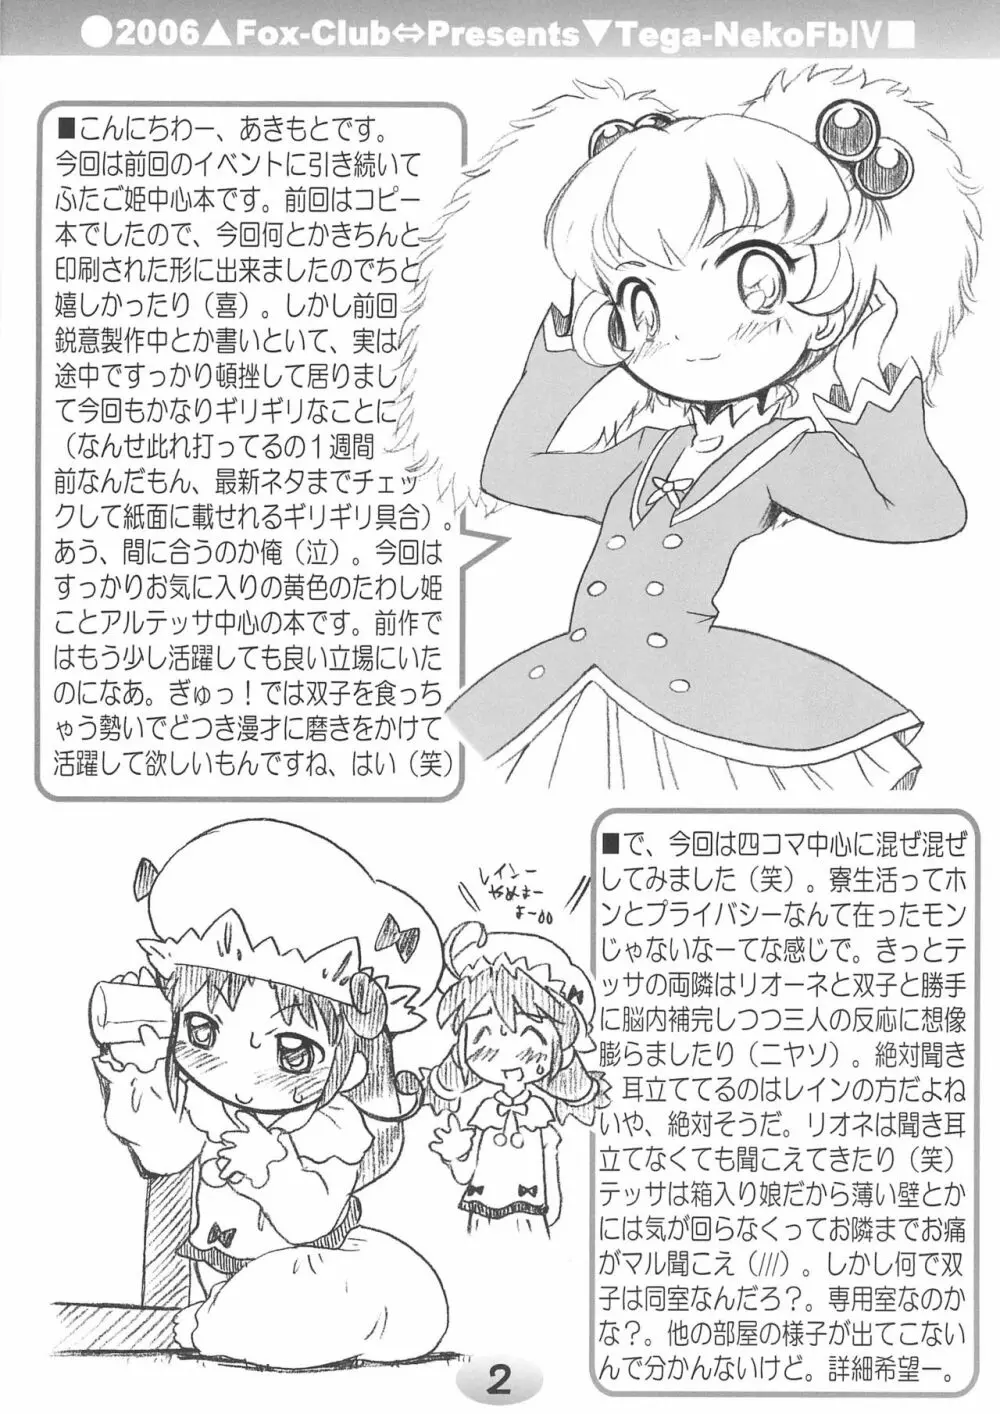 TeGa-NeKo Fb IV ふたご姫 2ぷらす - page2